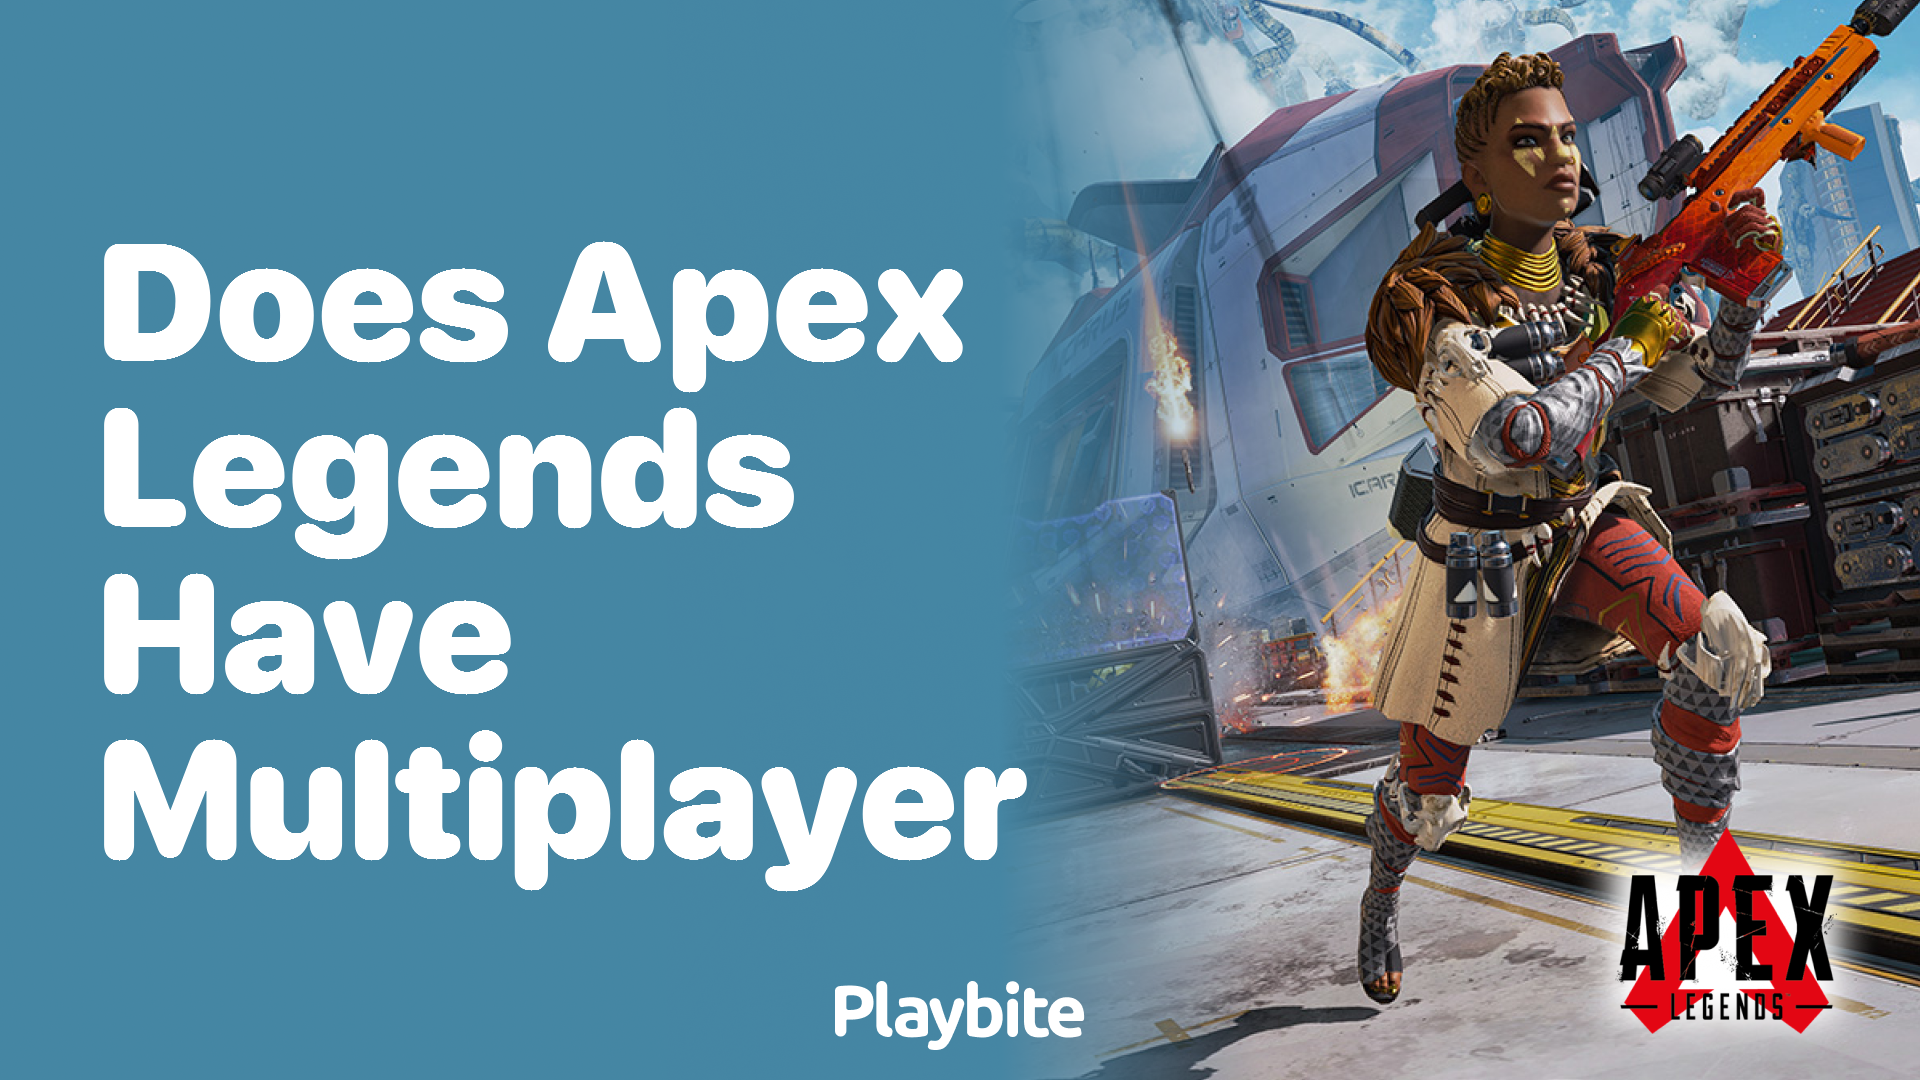 Does Apex Legends have multiplayer?